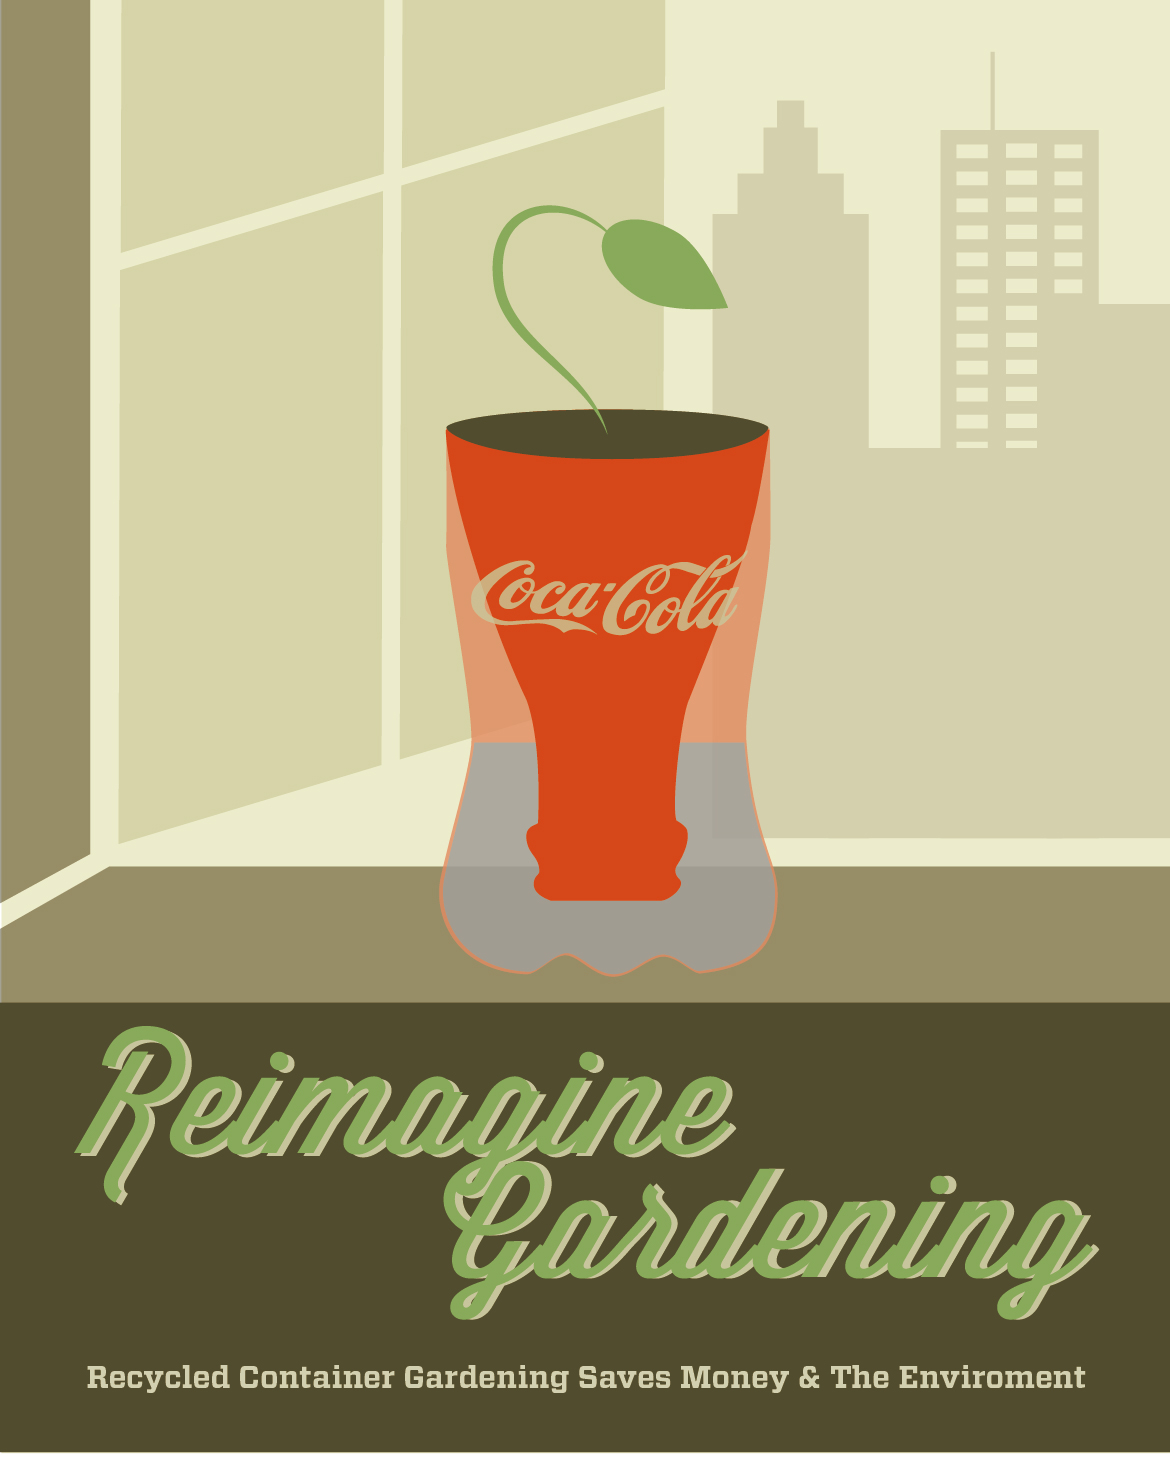 wpa Student work eco gardening gardening window garden apartment garden recycle repurpose